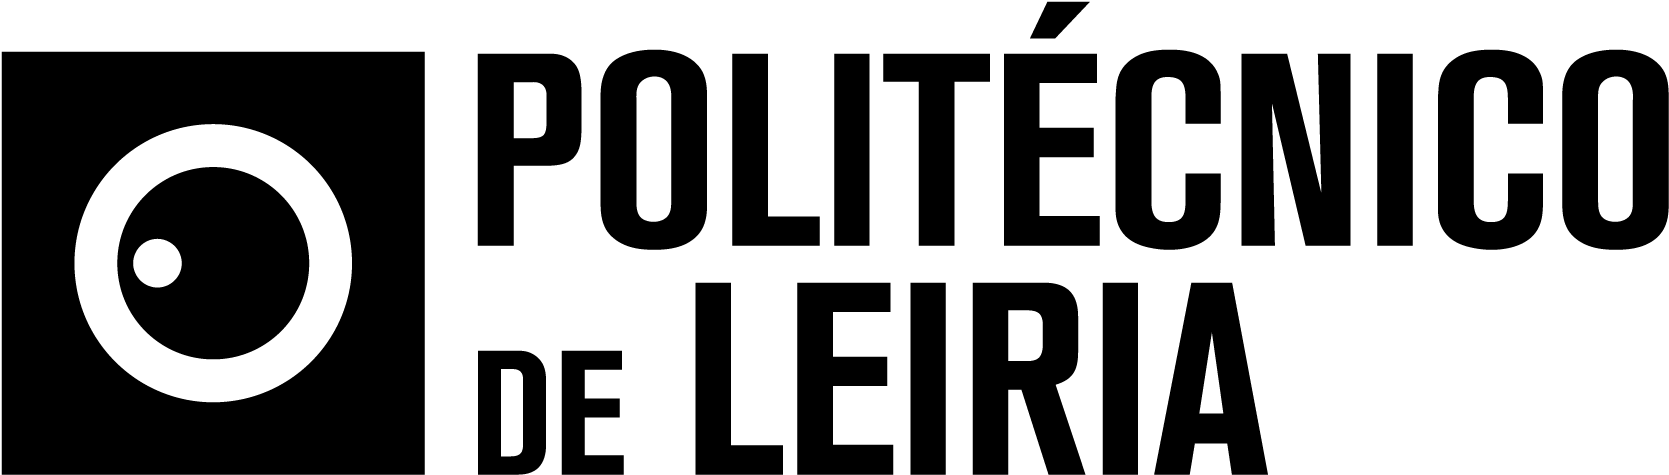 pngkit ipl 2018 logo png 7765908